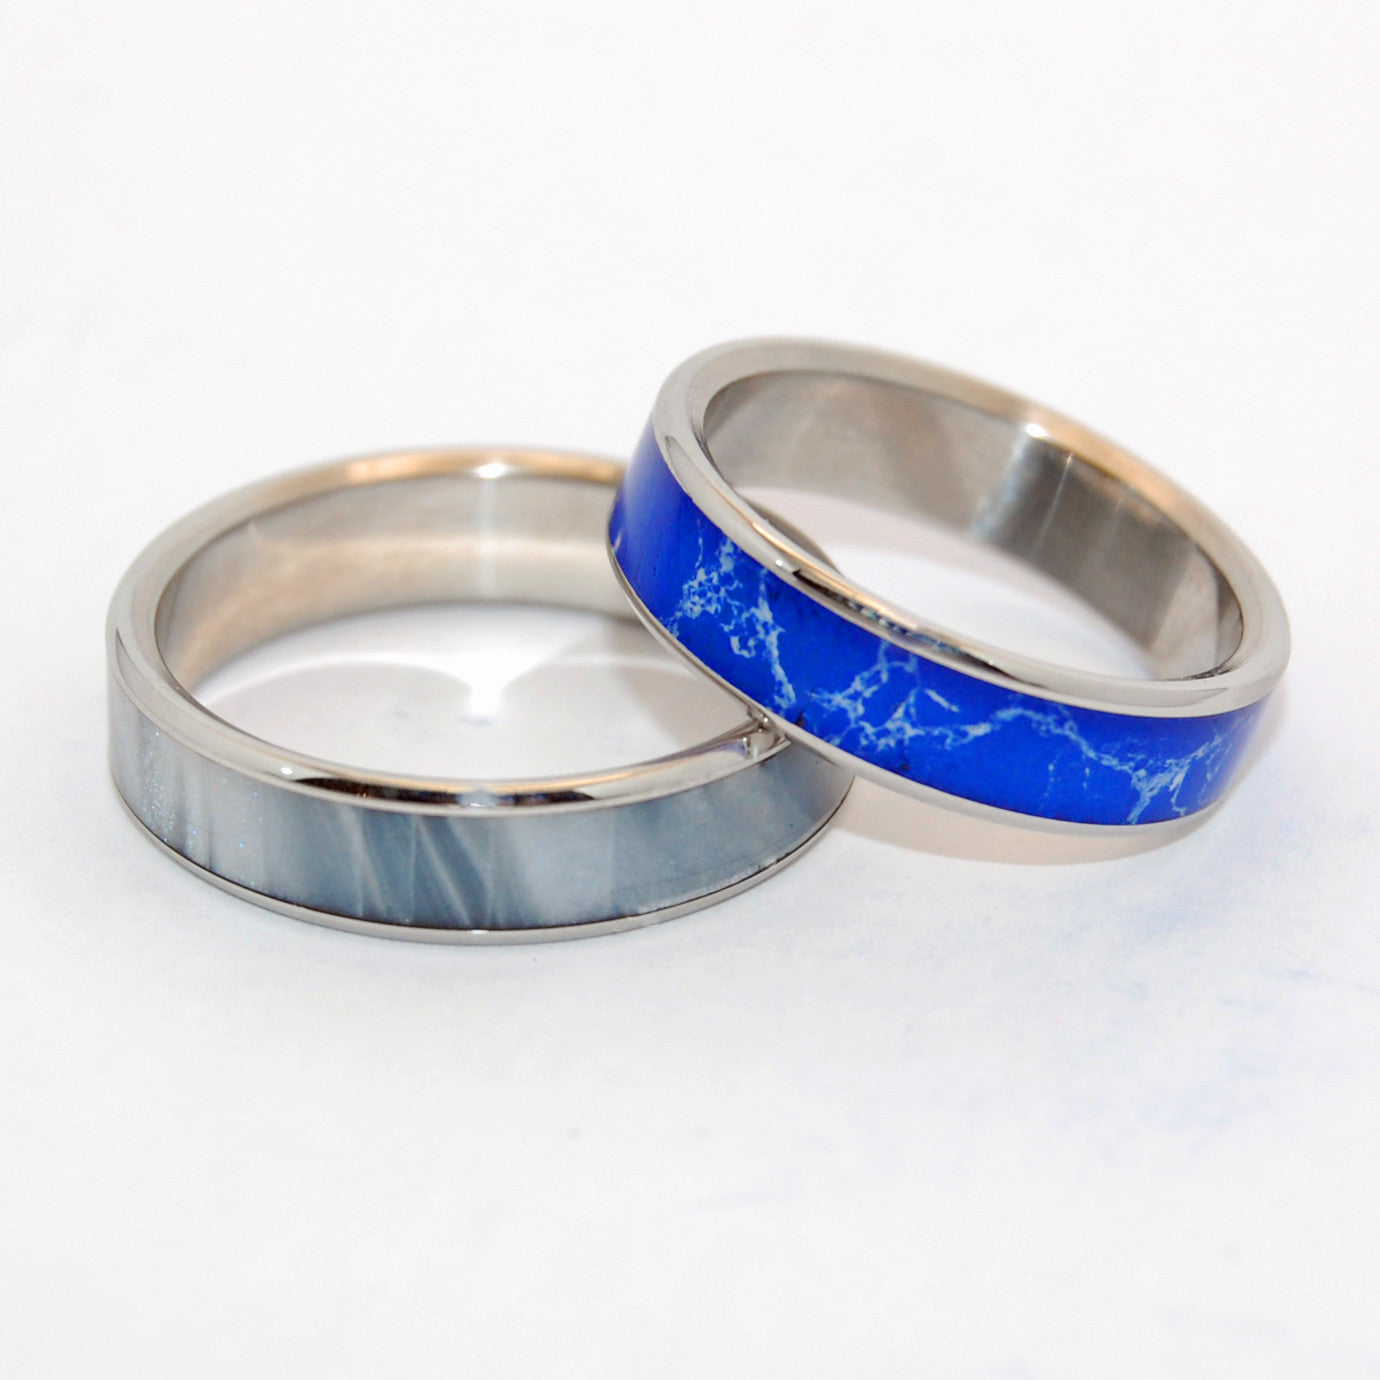 FOG STARS | Gray Pearl Opalescent & Sodalite Stone Titanium Wedding Rings Set - Minter and Richter Designs